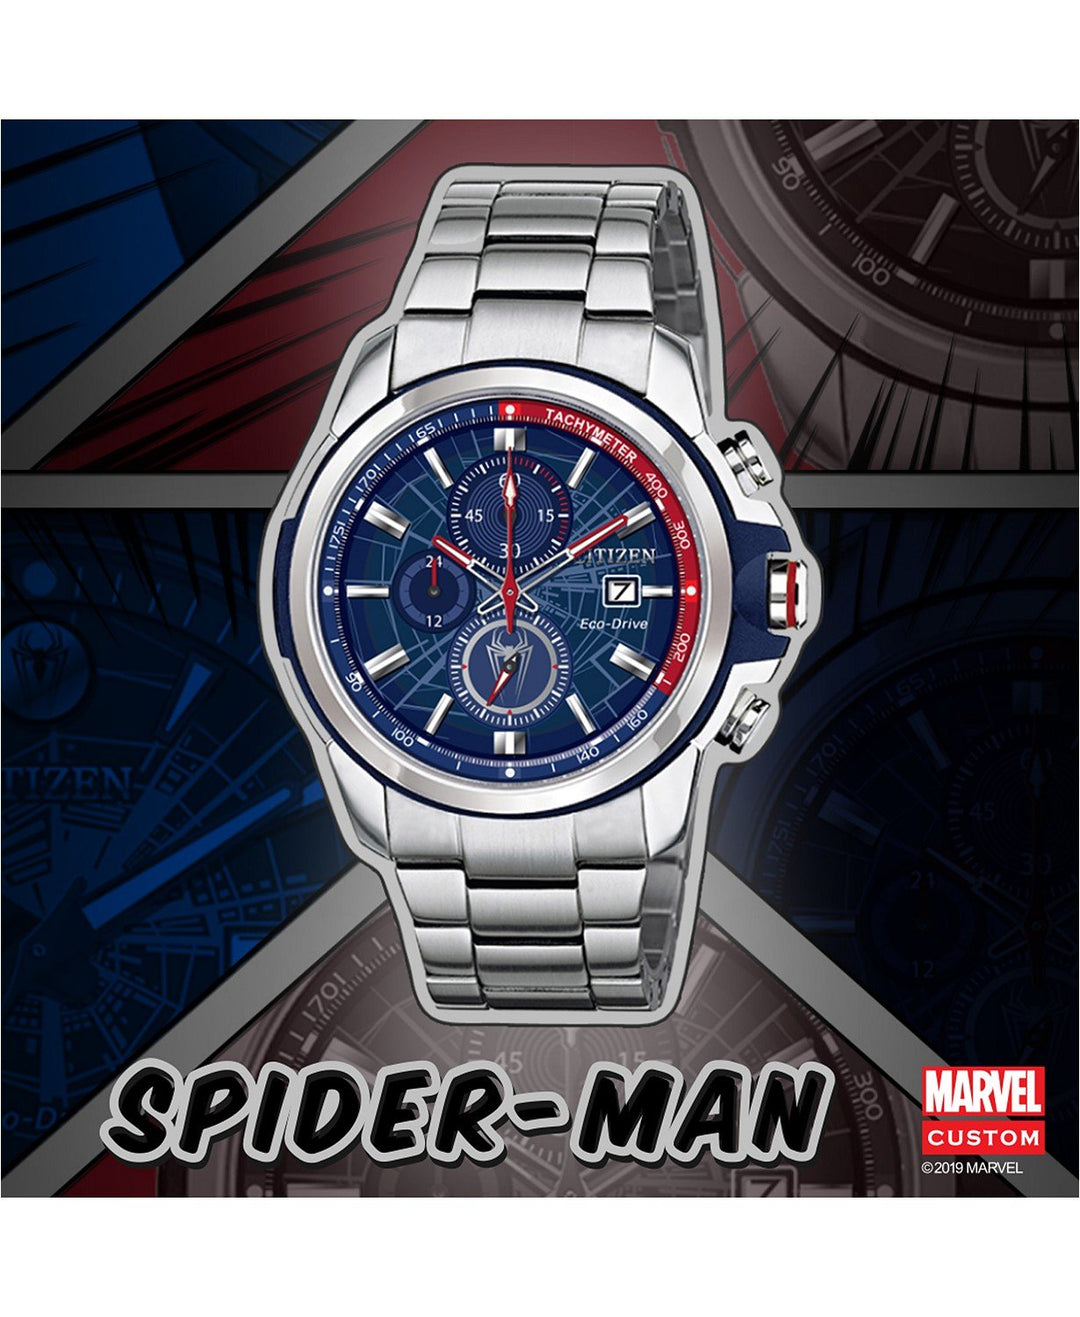 Marvel Spiderman Citizen Eco-Drive Watch CA0429-53W